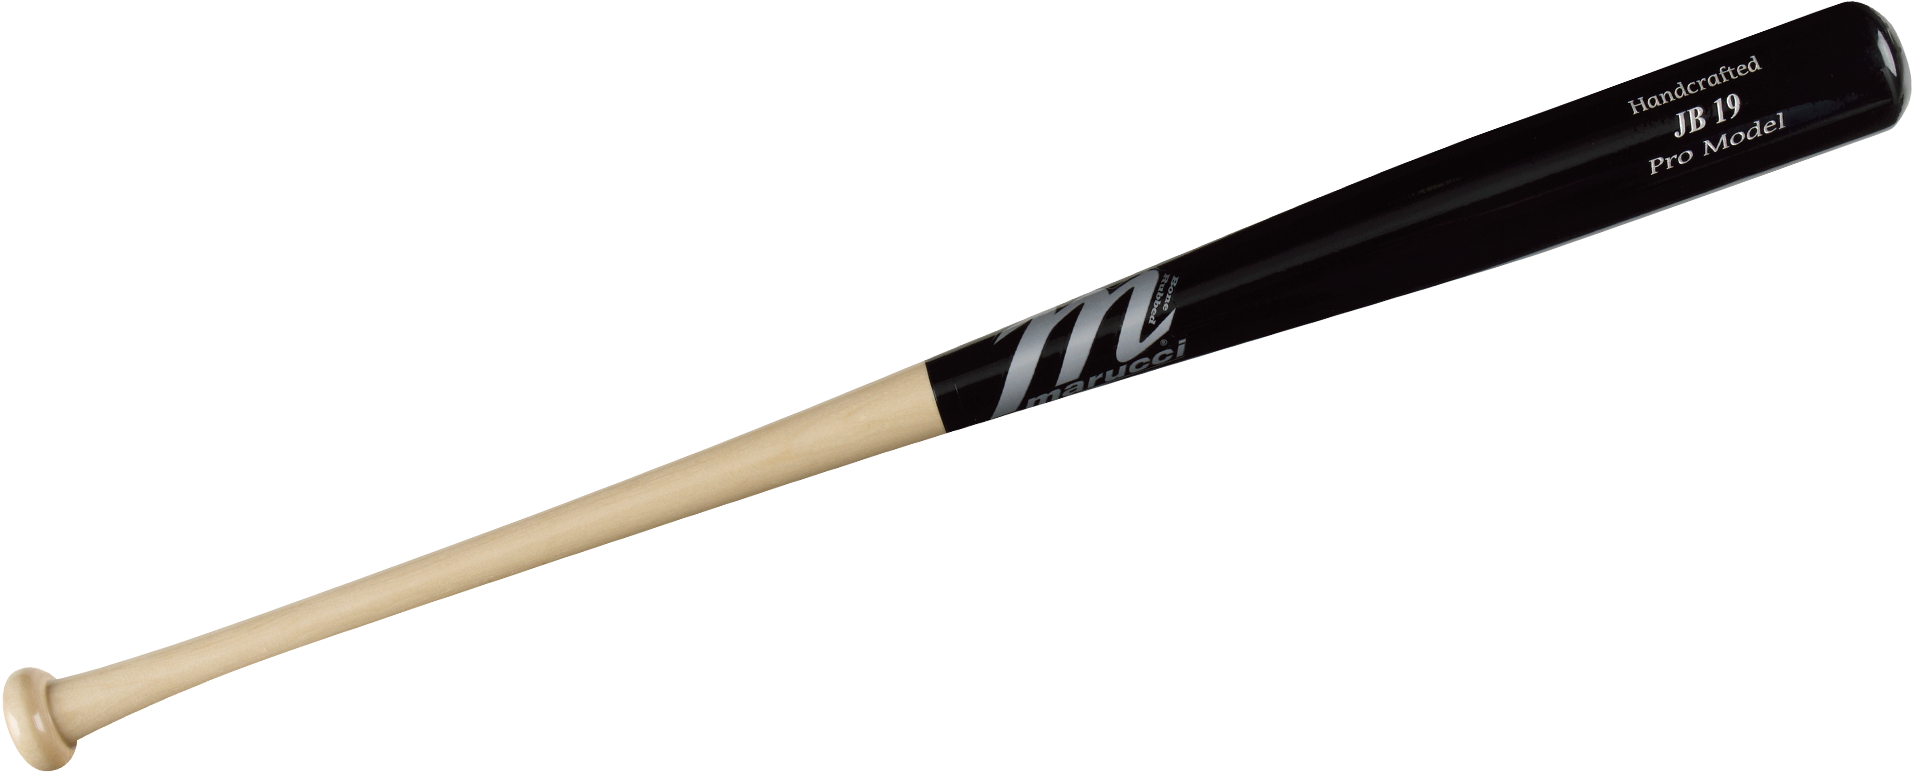 Baseball Bats - Common Wooden Baseball Bats (1920x784)